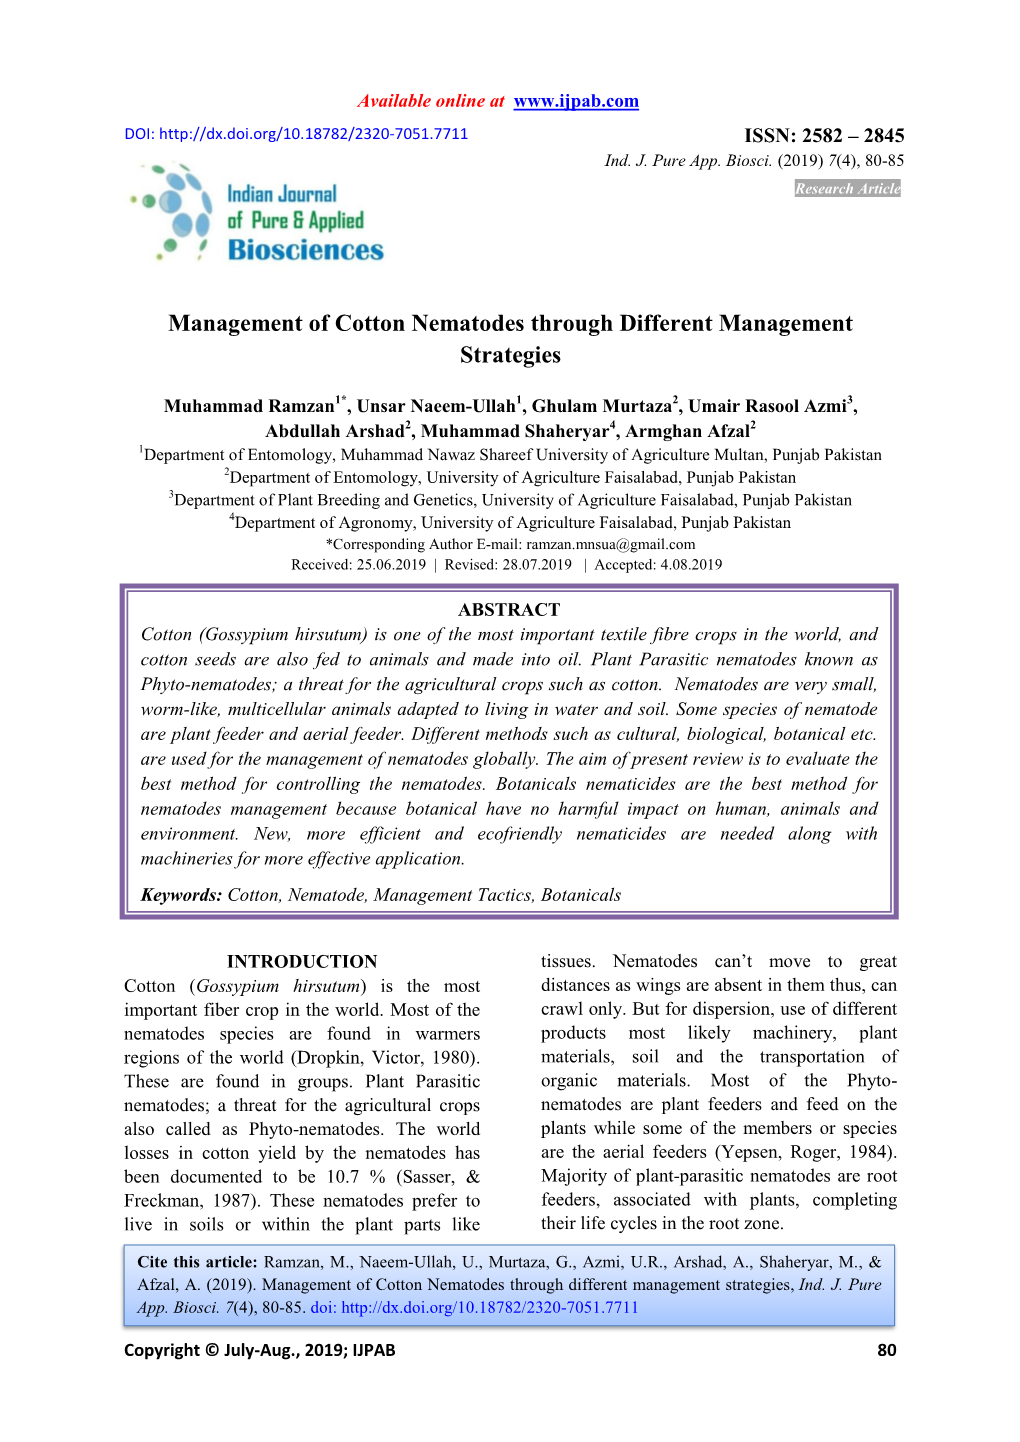 Management of Cotton Nematodes Through Different Management Strategies